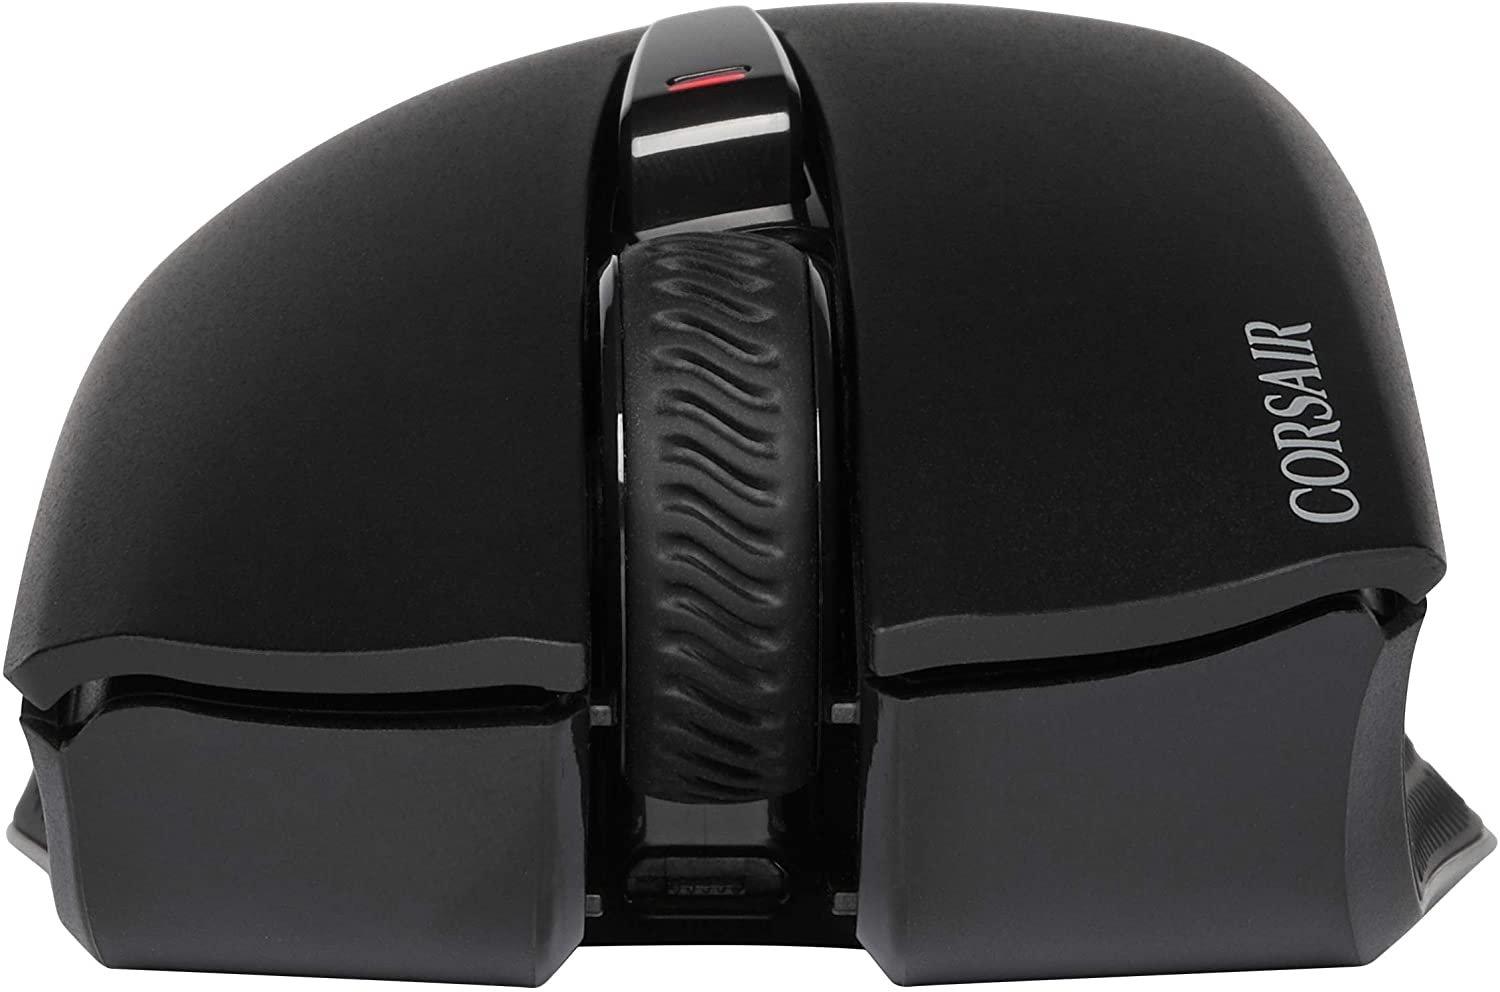 HARPOON RGB Wireless Optical Gaming Mouse Black CORSAIR 